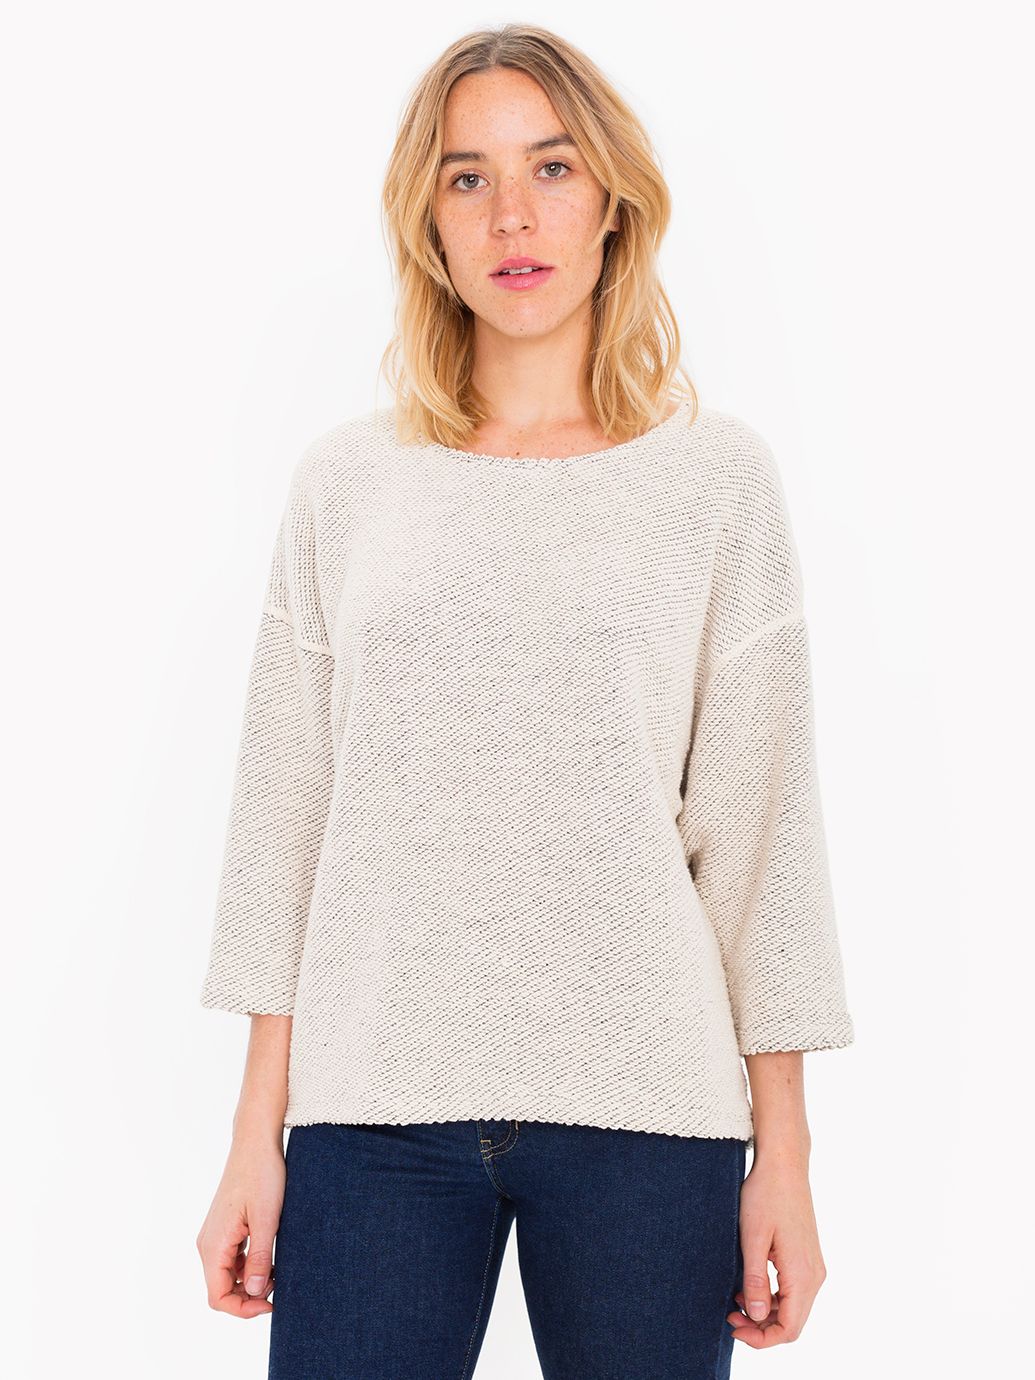 Reversible Easy Sweater | American Apparel